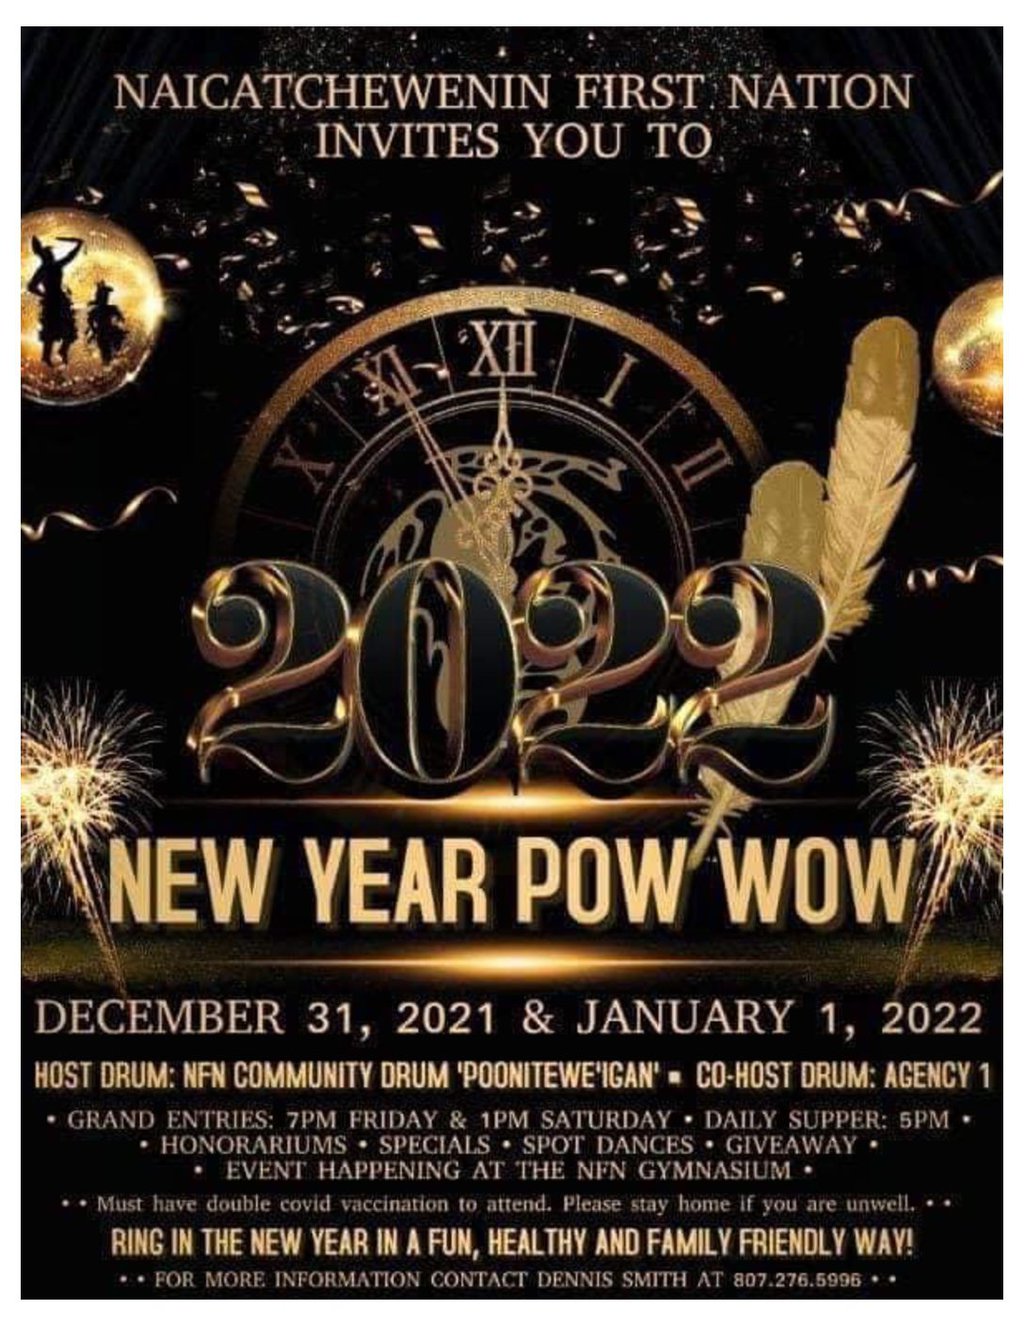 Naicatchewenin First Nation 2022 New Year Pow Wow